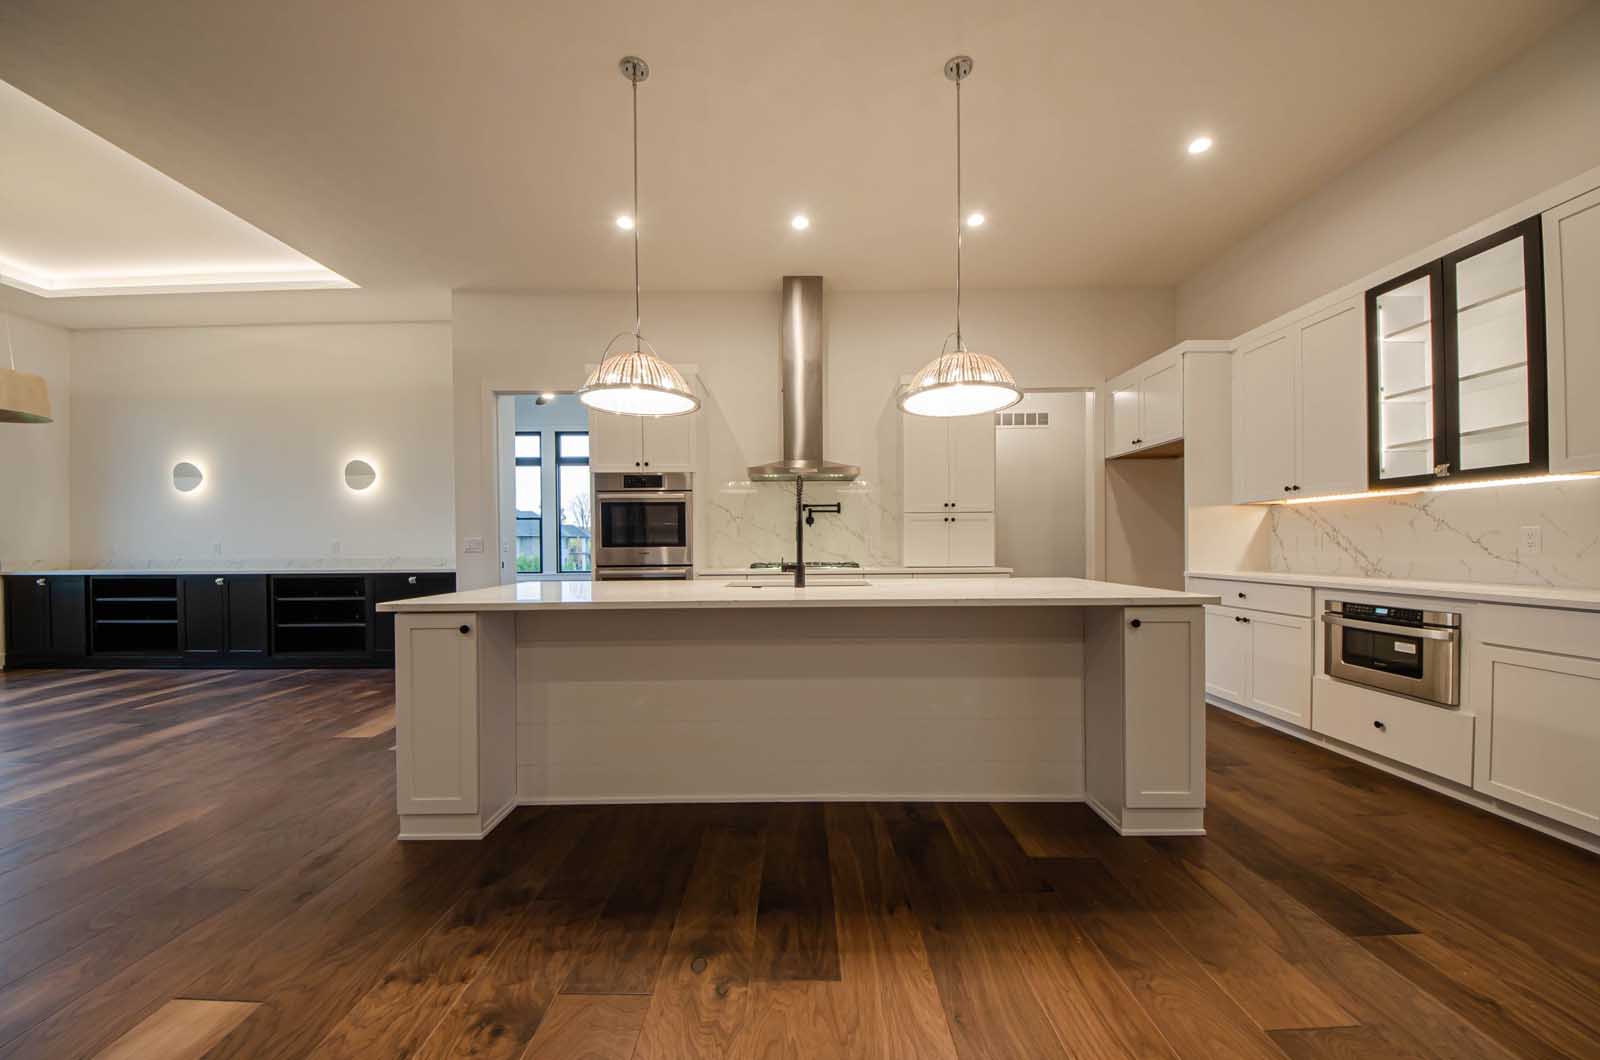 Design Homes The Tahoe kitchen island